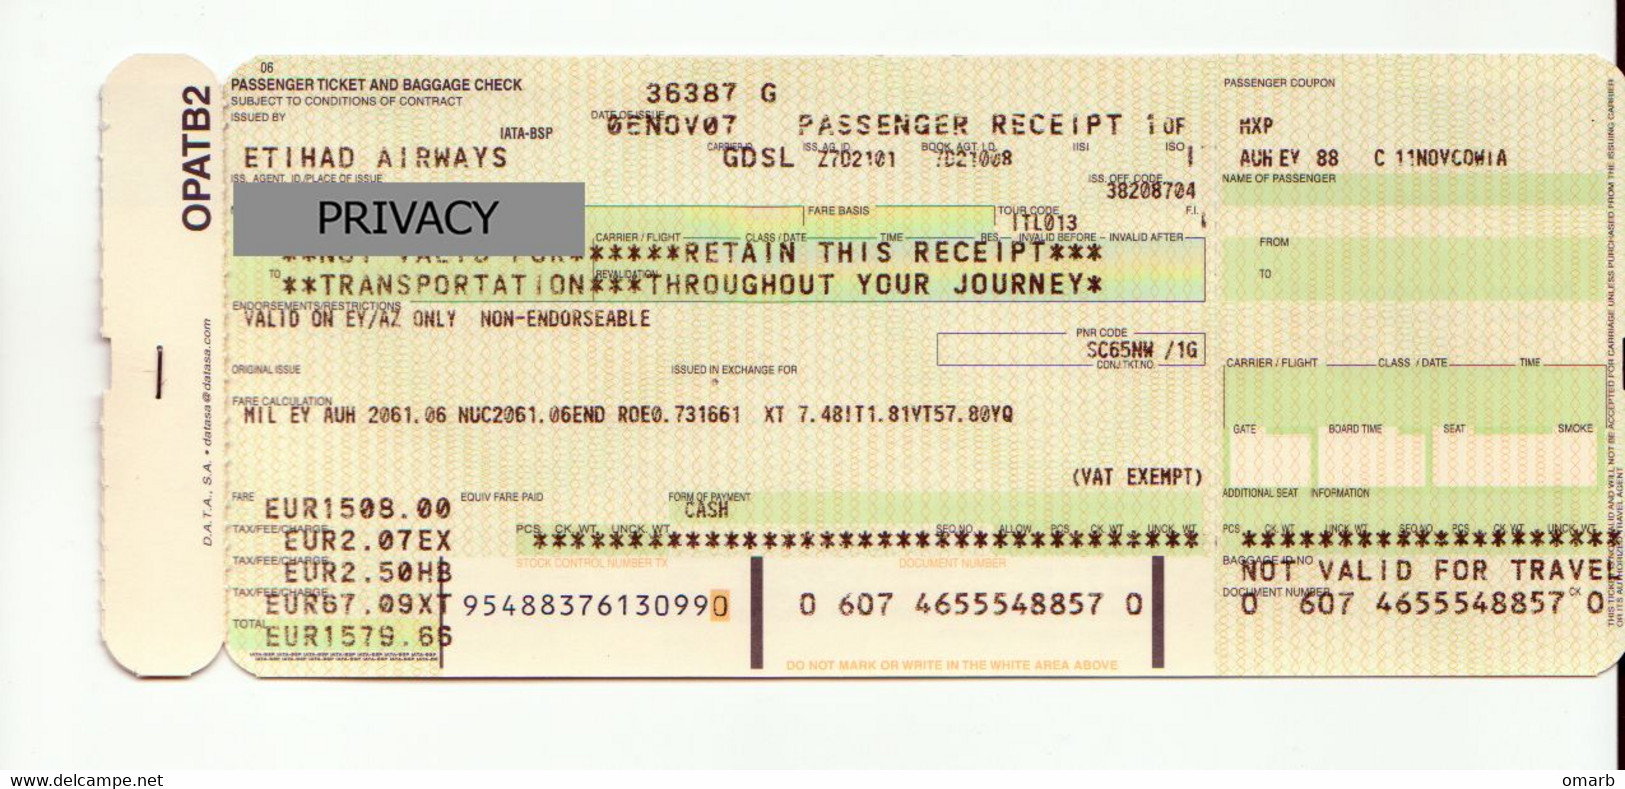 Alt1126 Etihad Airways Billets Avion Ticket Biglietto Aereo Boarding Passenger Receipt Imbarco Milano Abu Dhabi EAU 2007 - Mundo